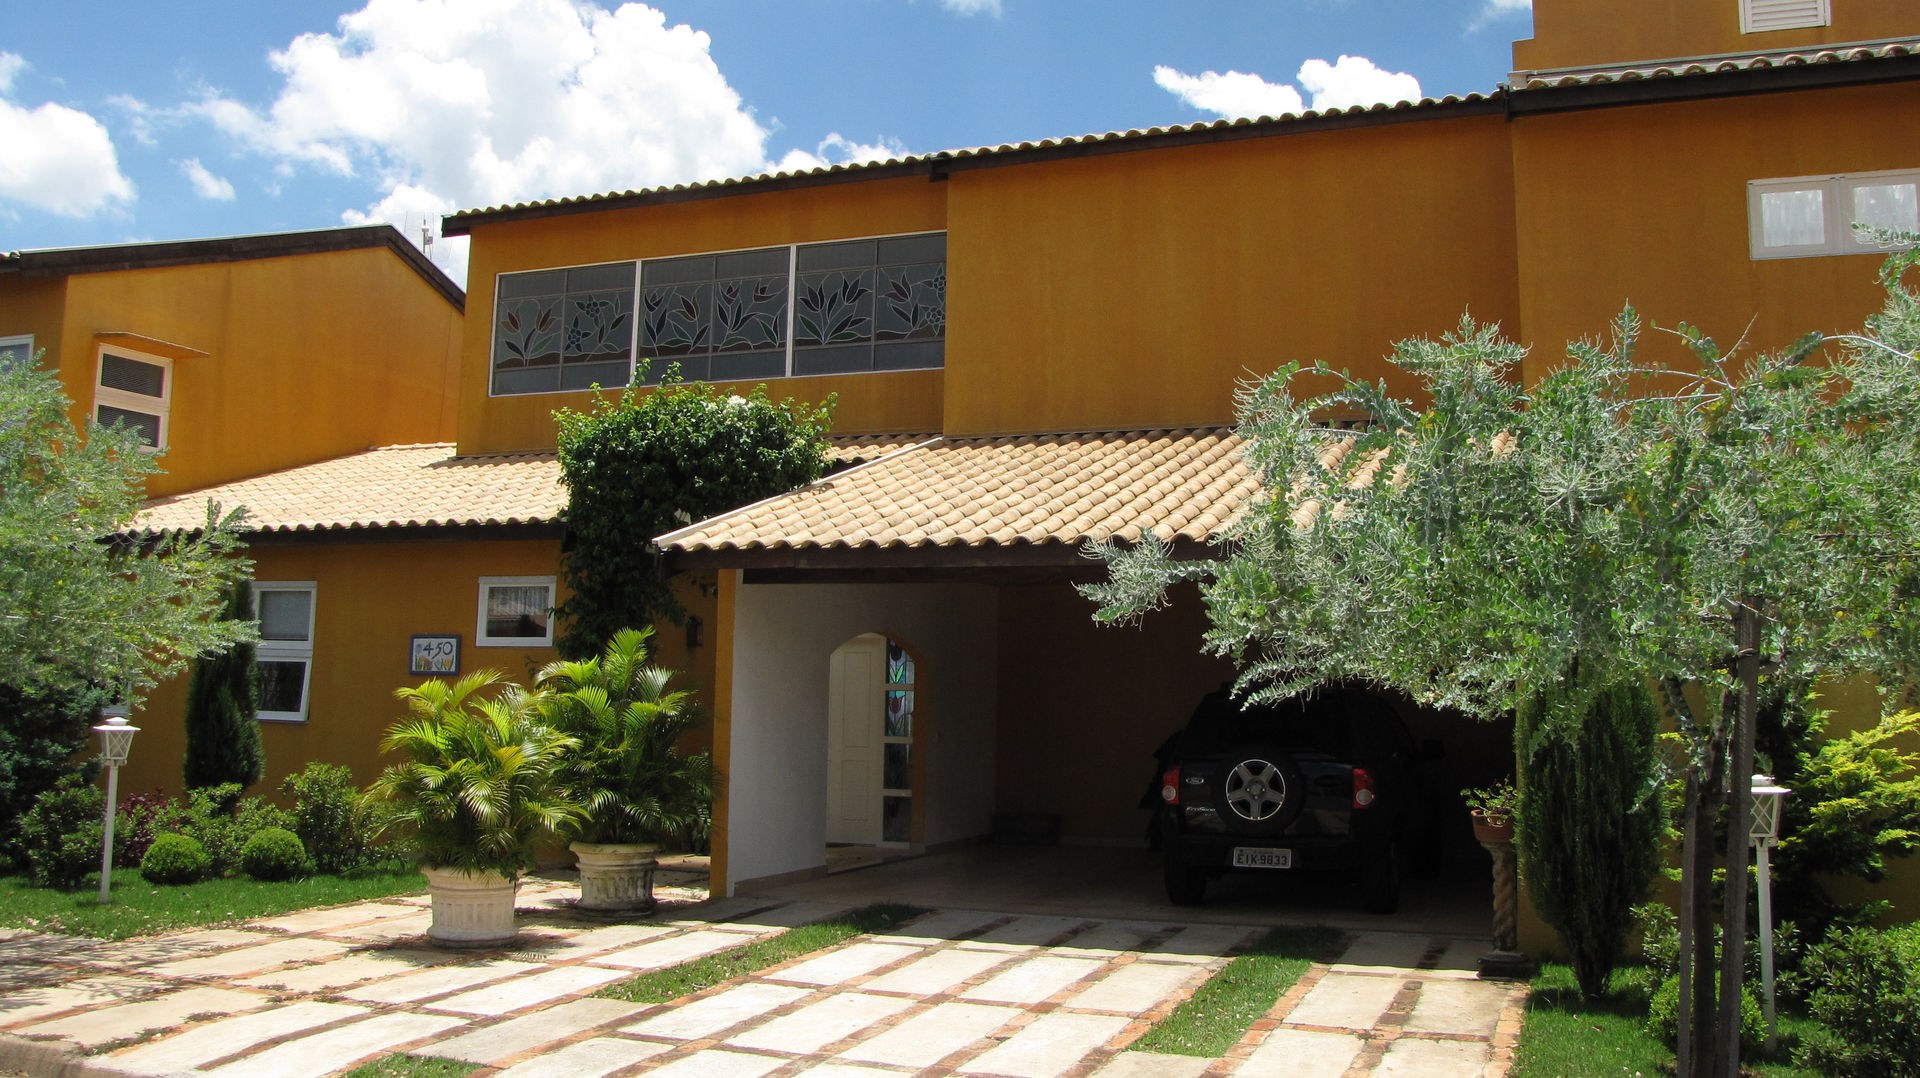 Residência em São Carlos, JMN arquitetura JMN arquitetura Rijtjeshuis